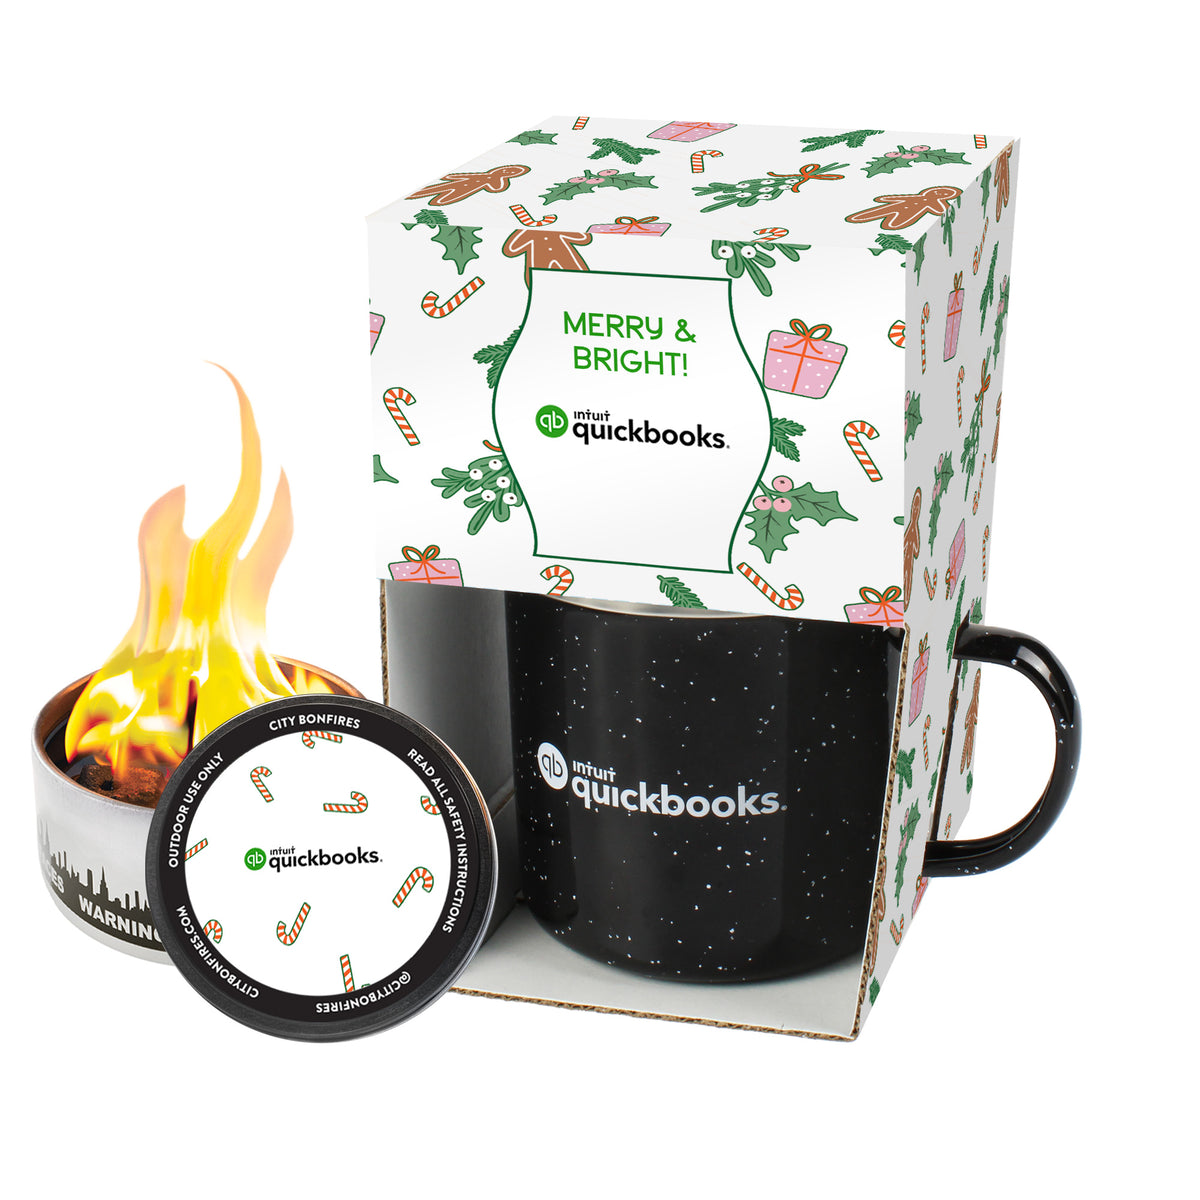 Speckled Camping Mug - 16 oz., City Bonfires® Portable Bonfire